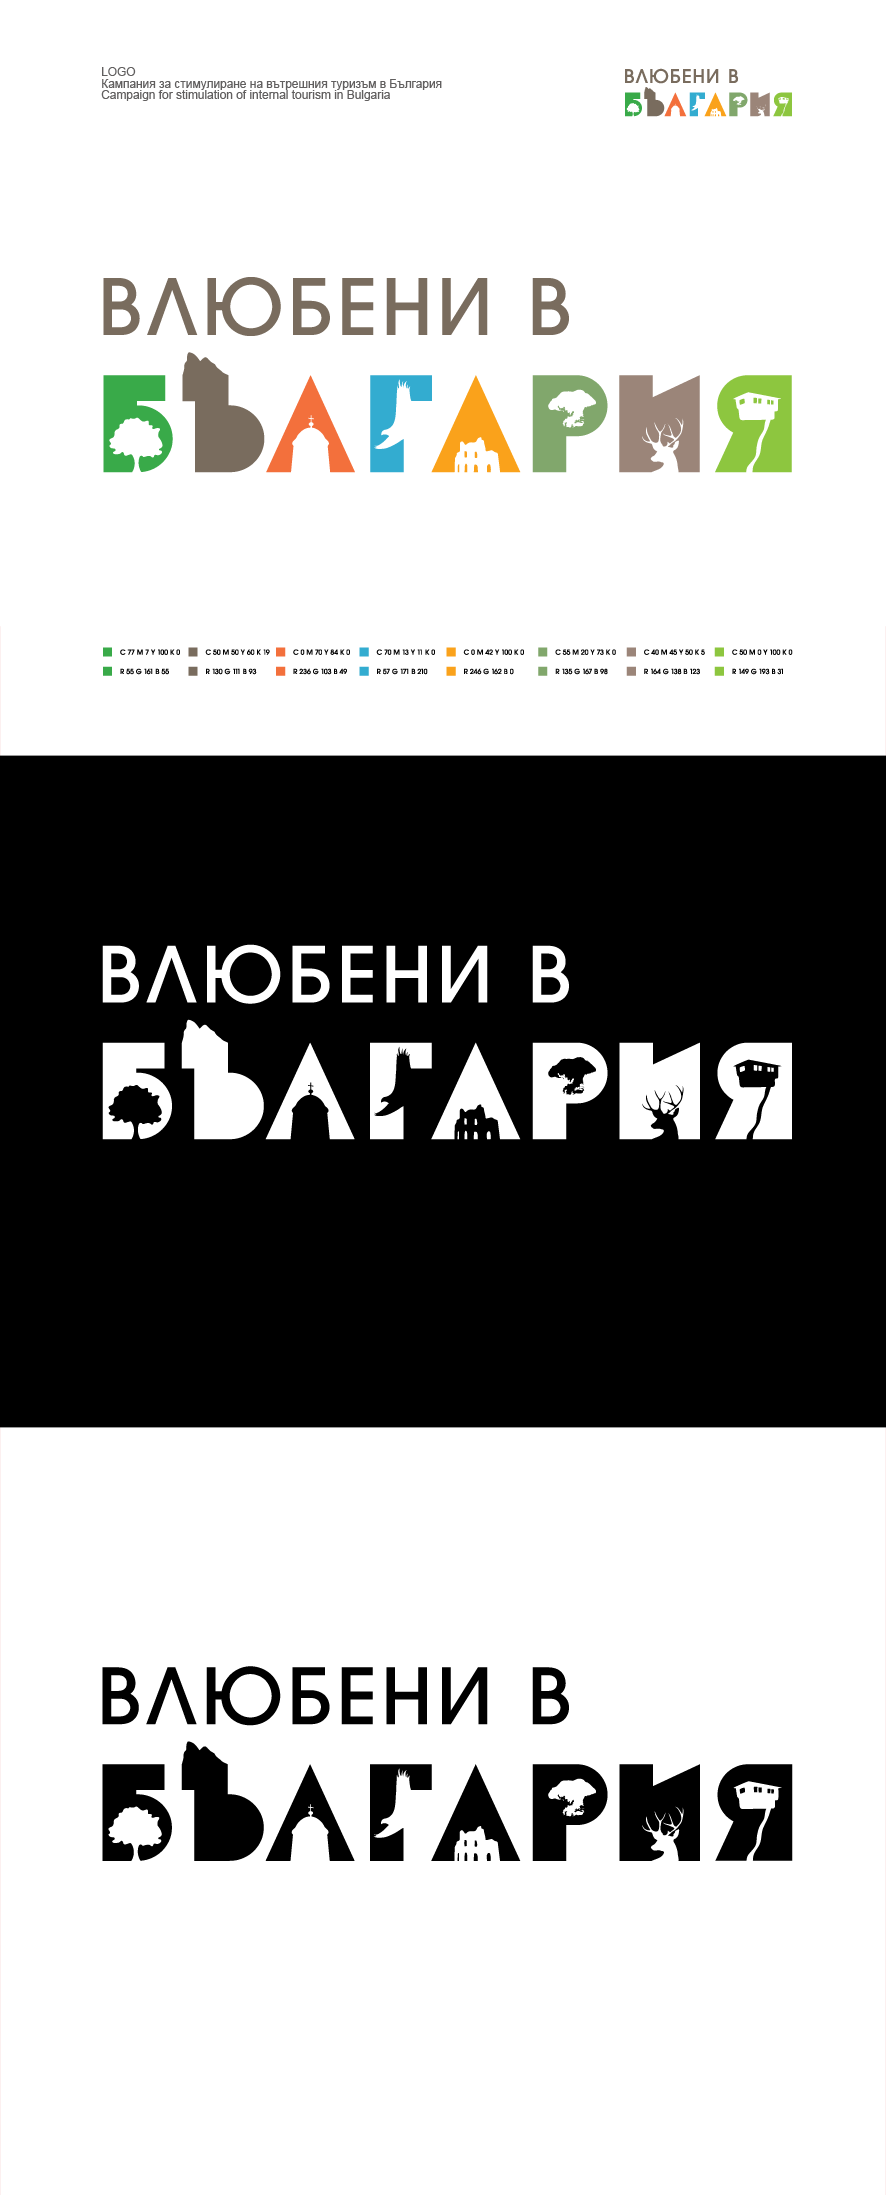 bulgaria tourism logo България